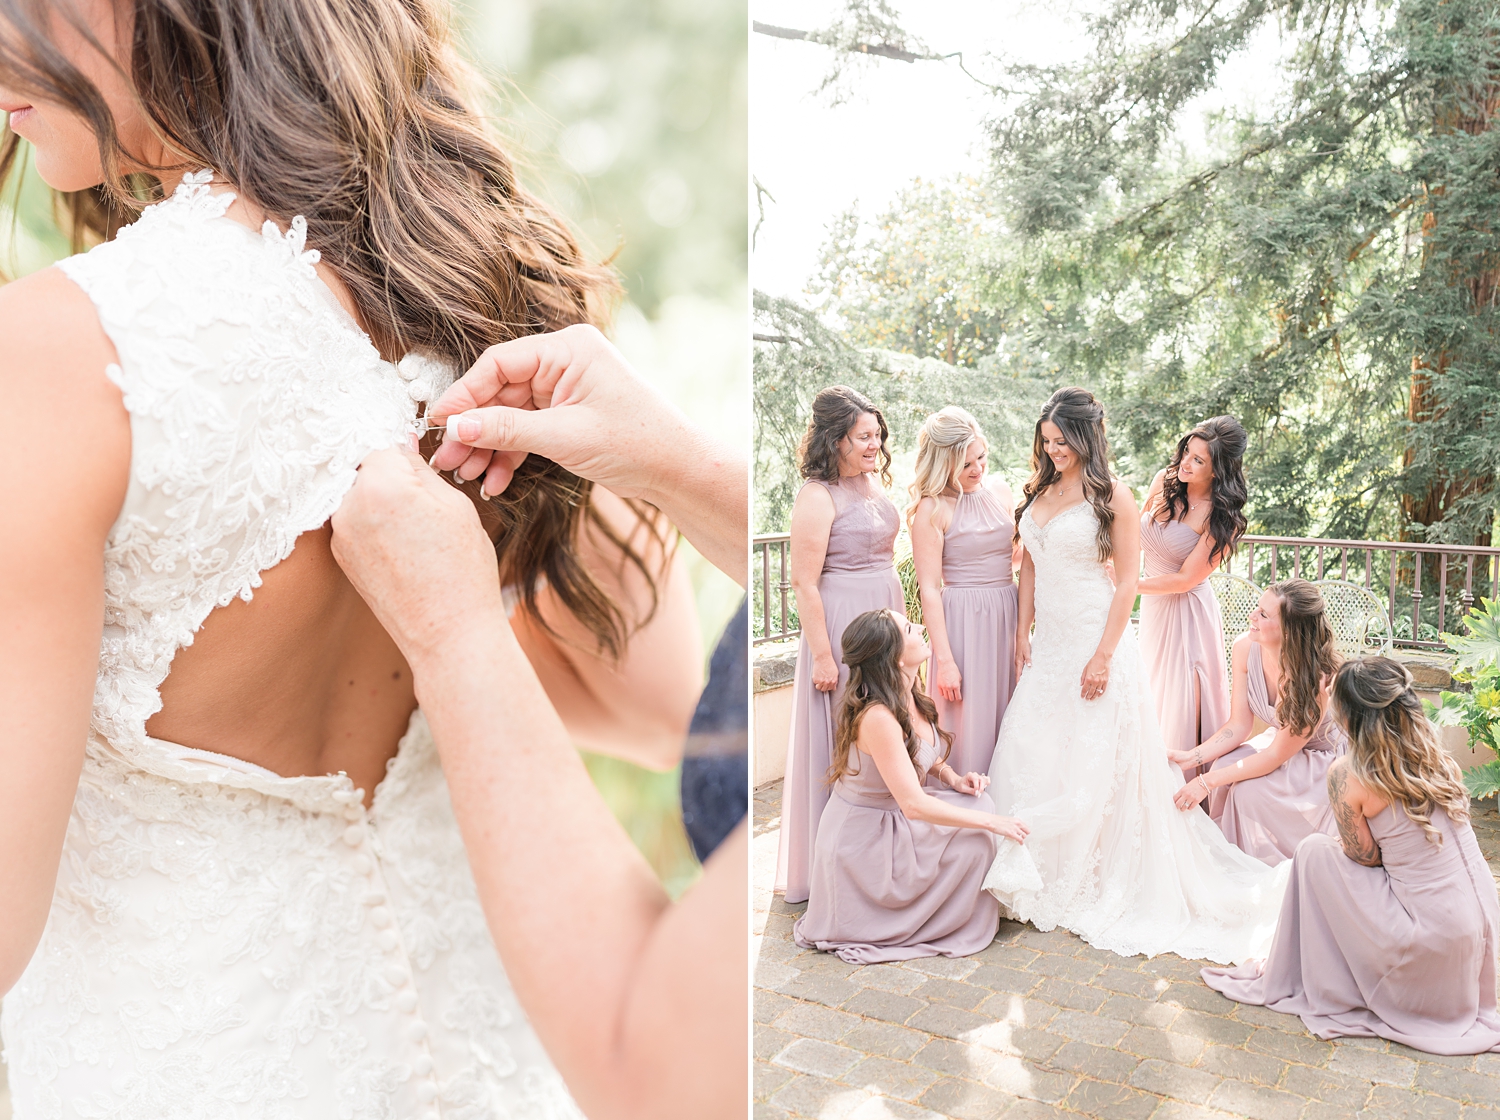 Bridal portraits / getting ready in a wedding gown photos 